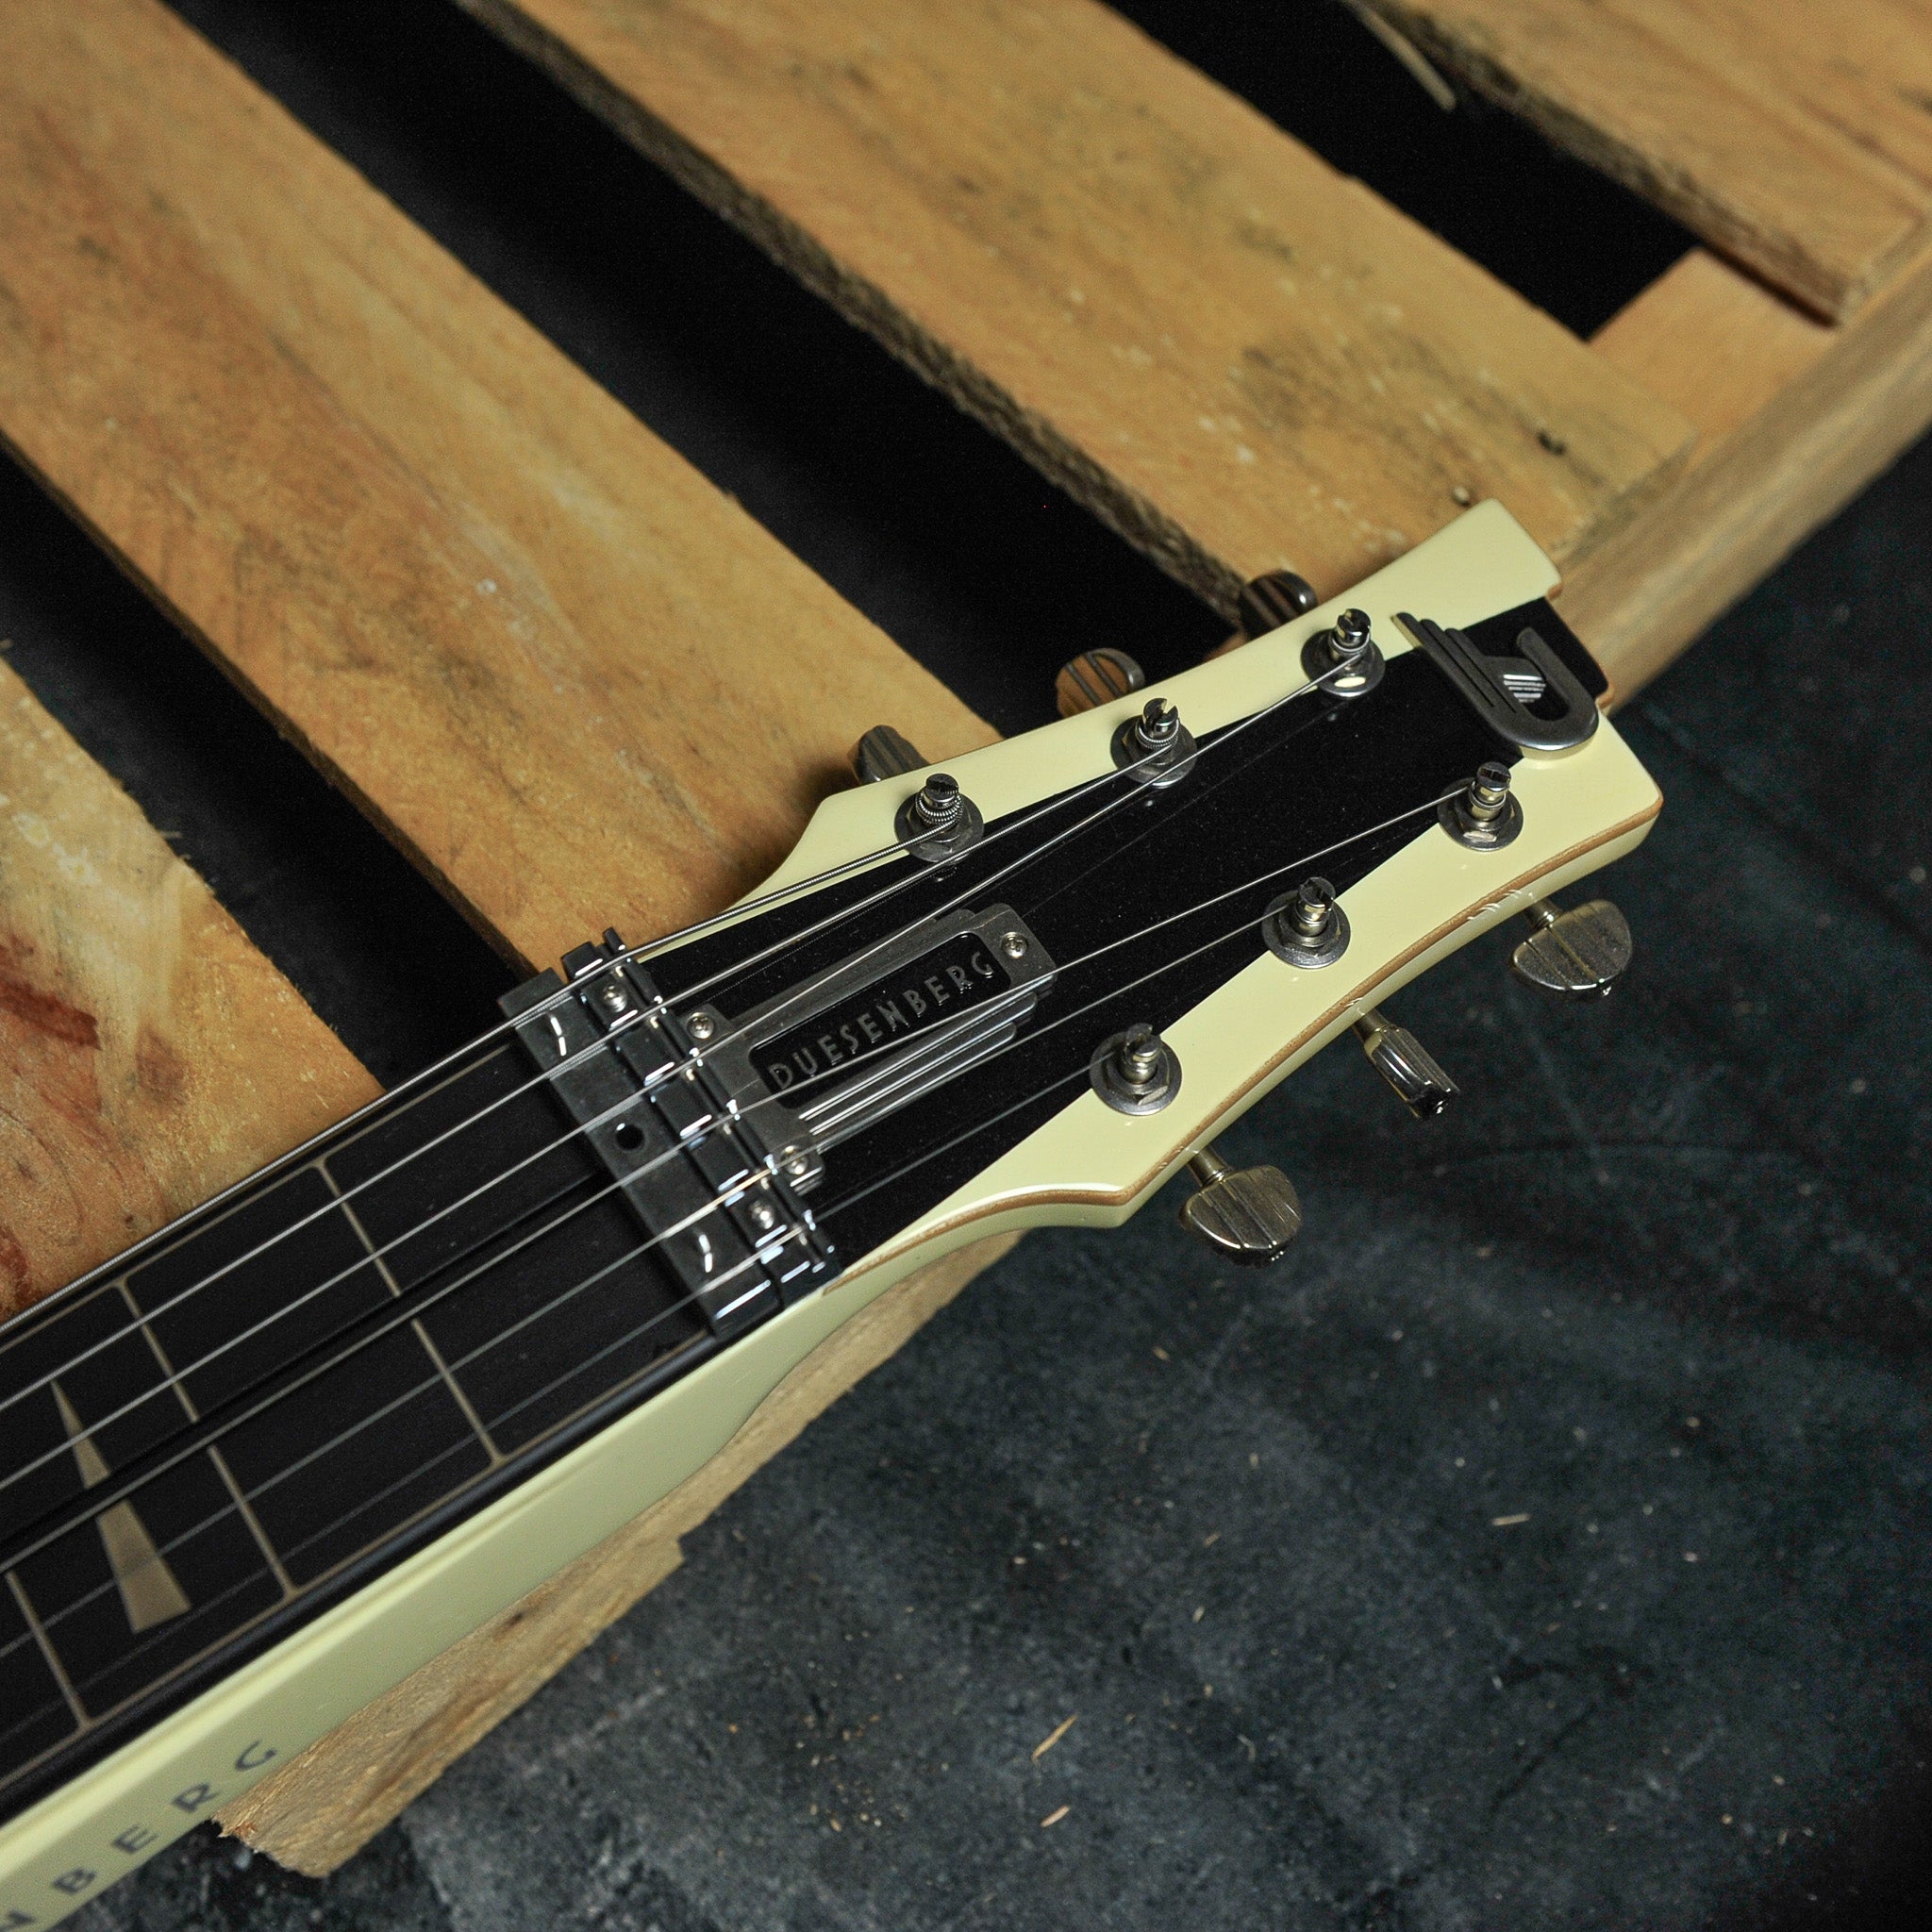 Duesenberg Alamo Lapsteel Guitar w/Case - Used